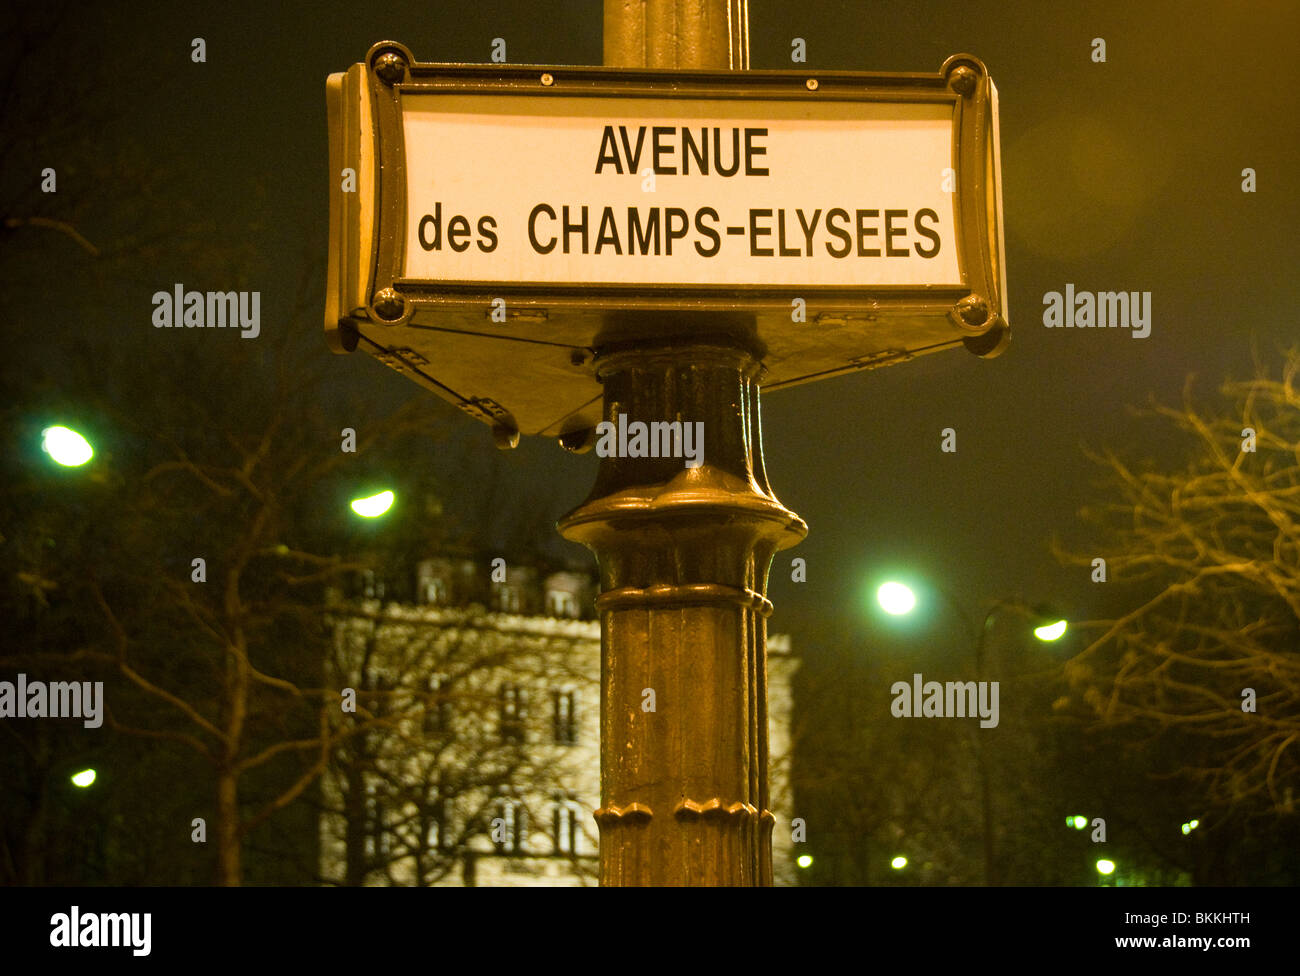 Avenue des Champs-Elysees sign in Paris France Stock Photo